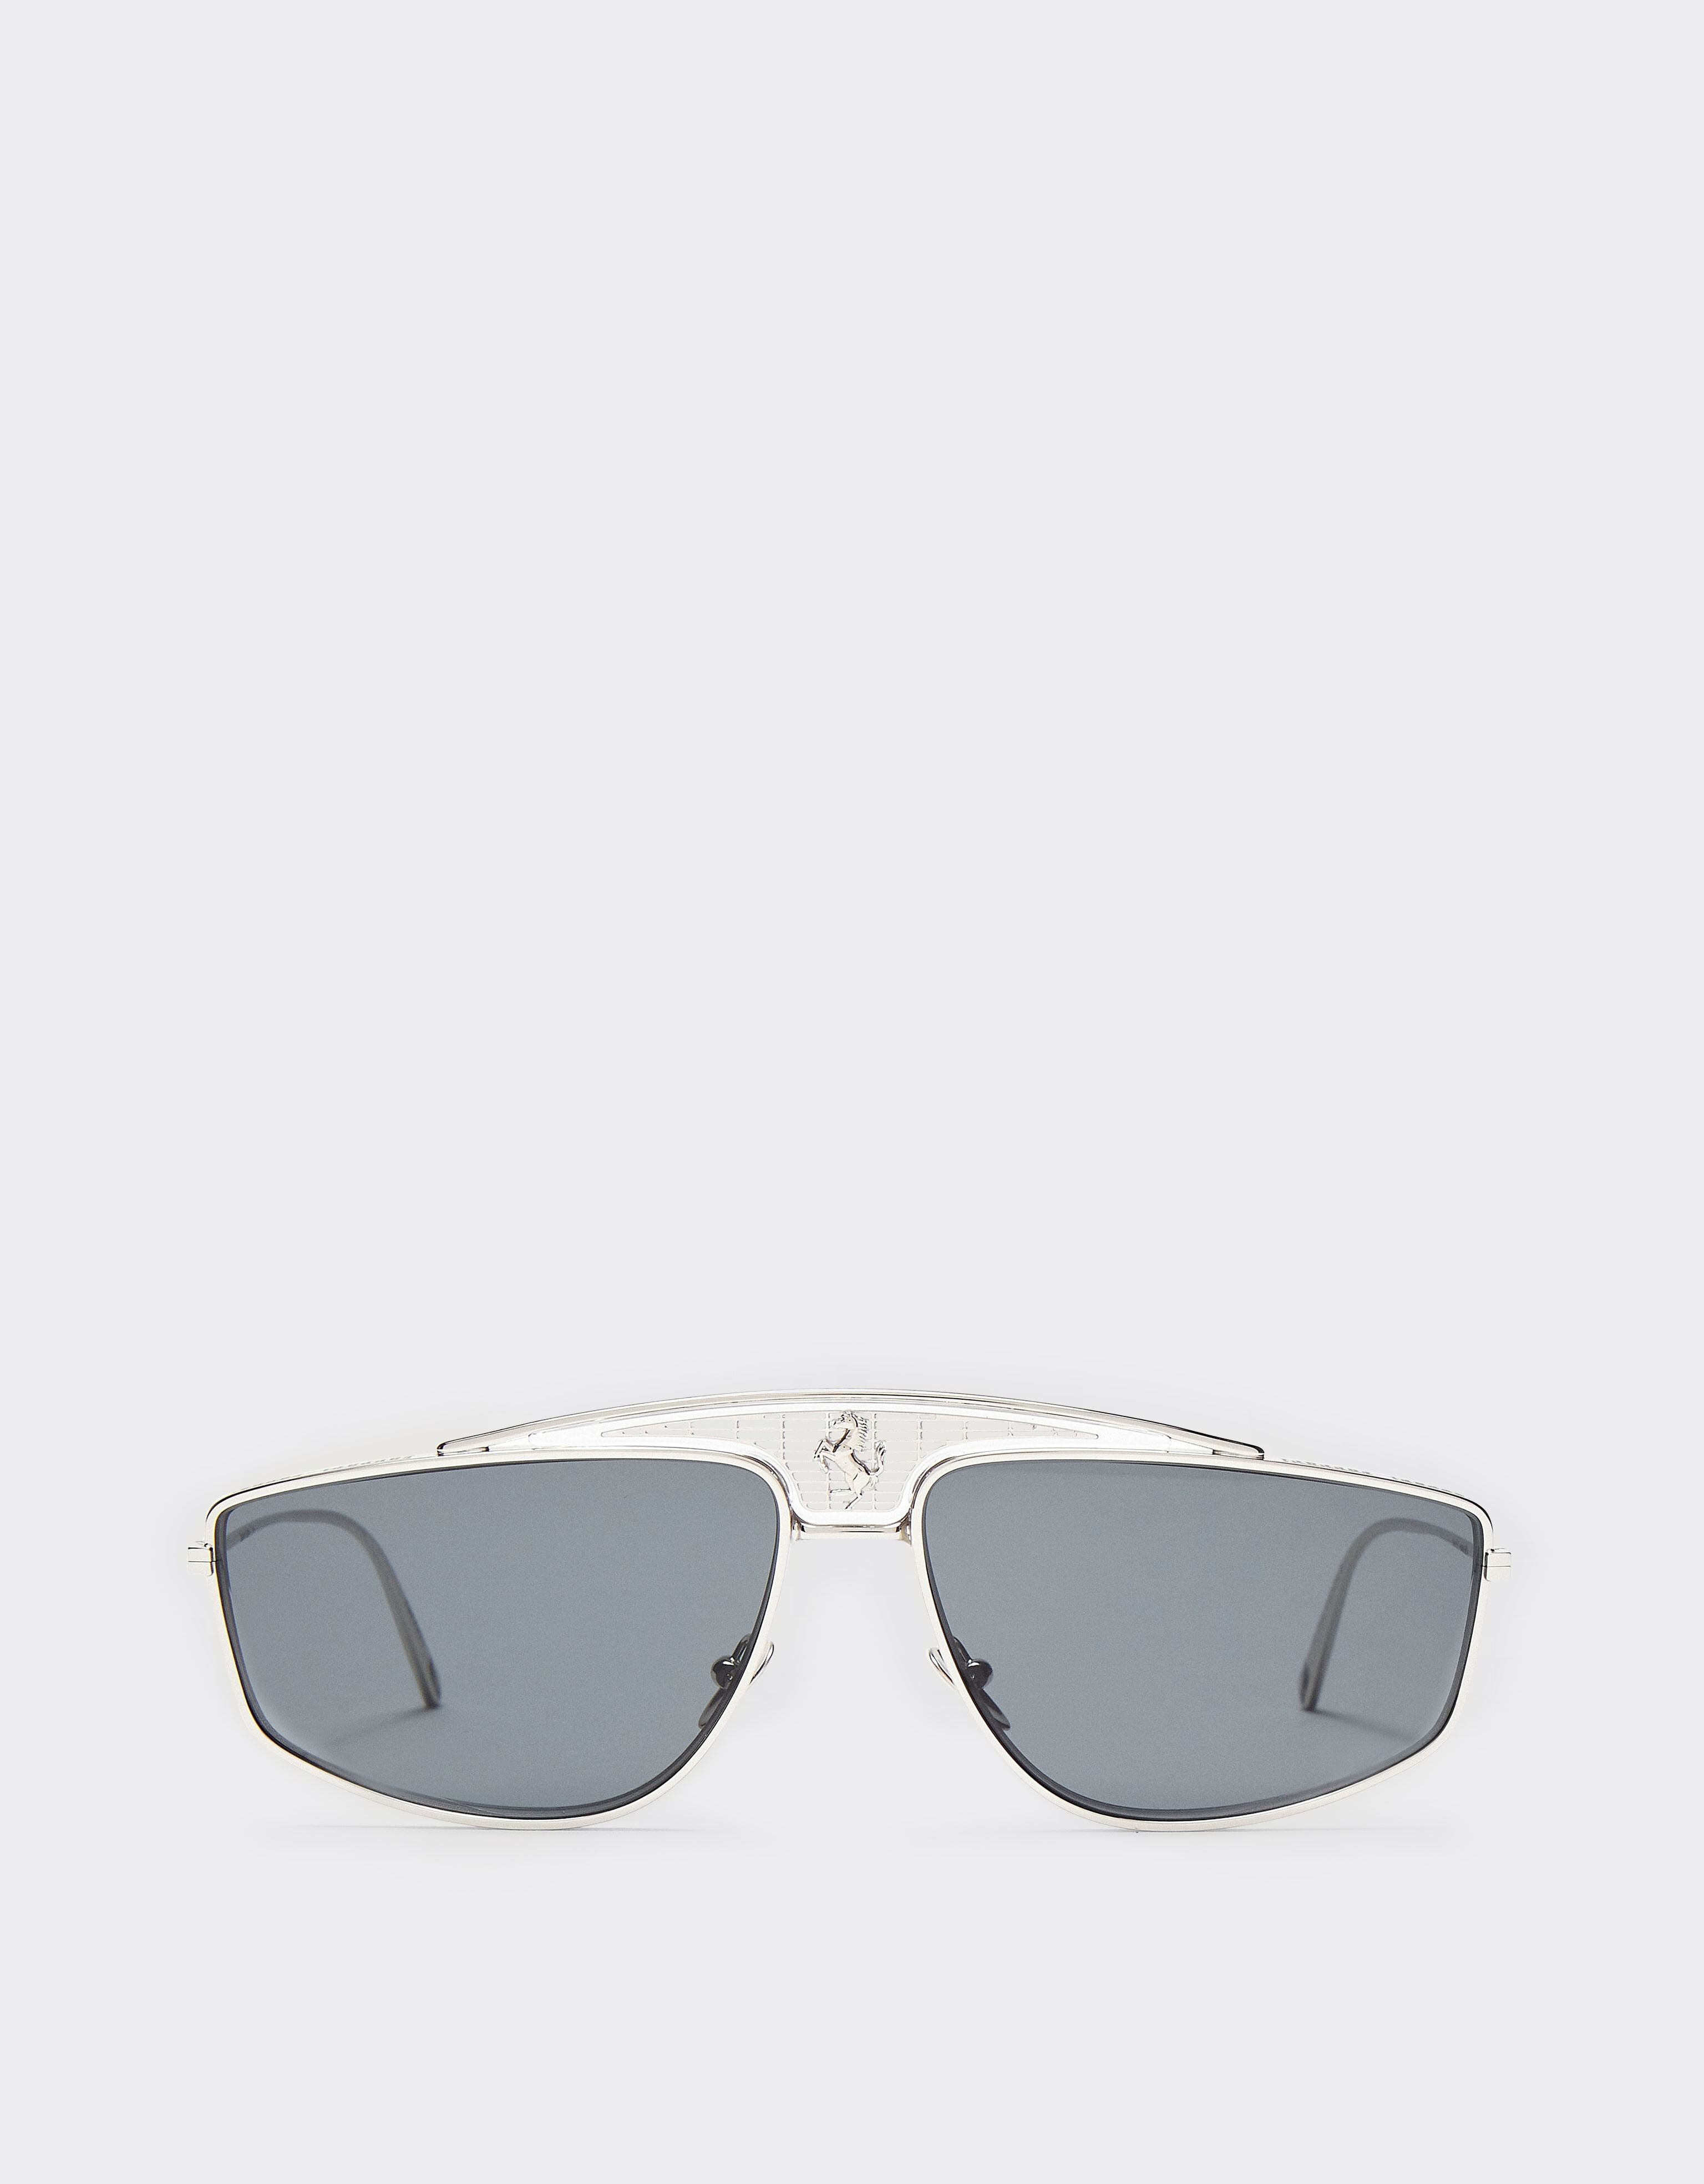 Ferrari Ferrari sunglasses with dark grey lenses Gold F0411f